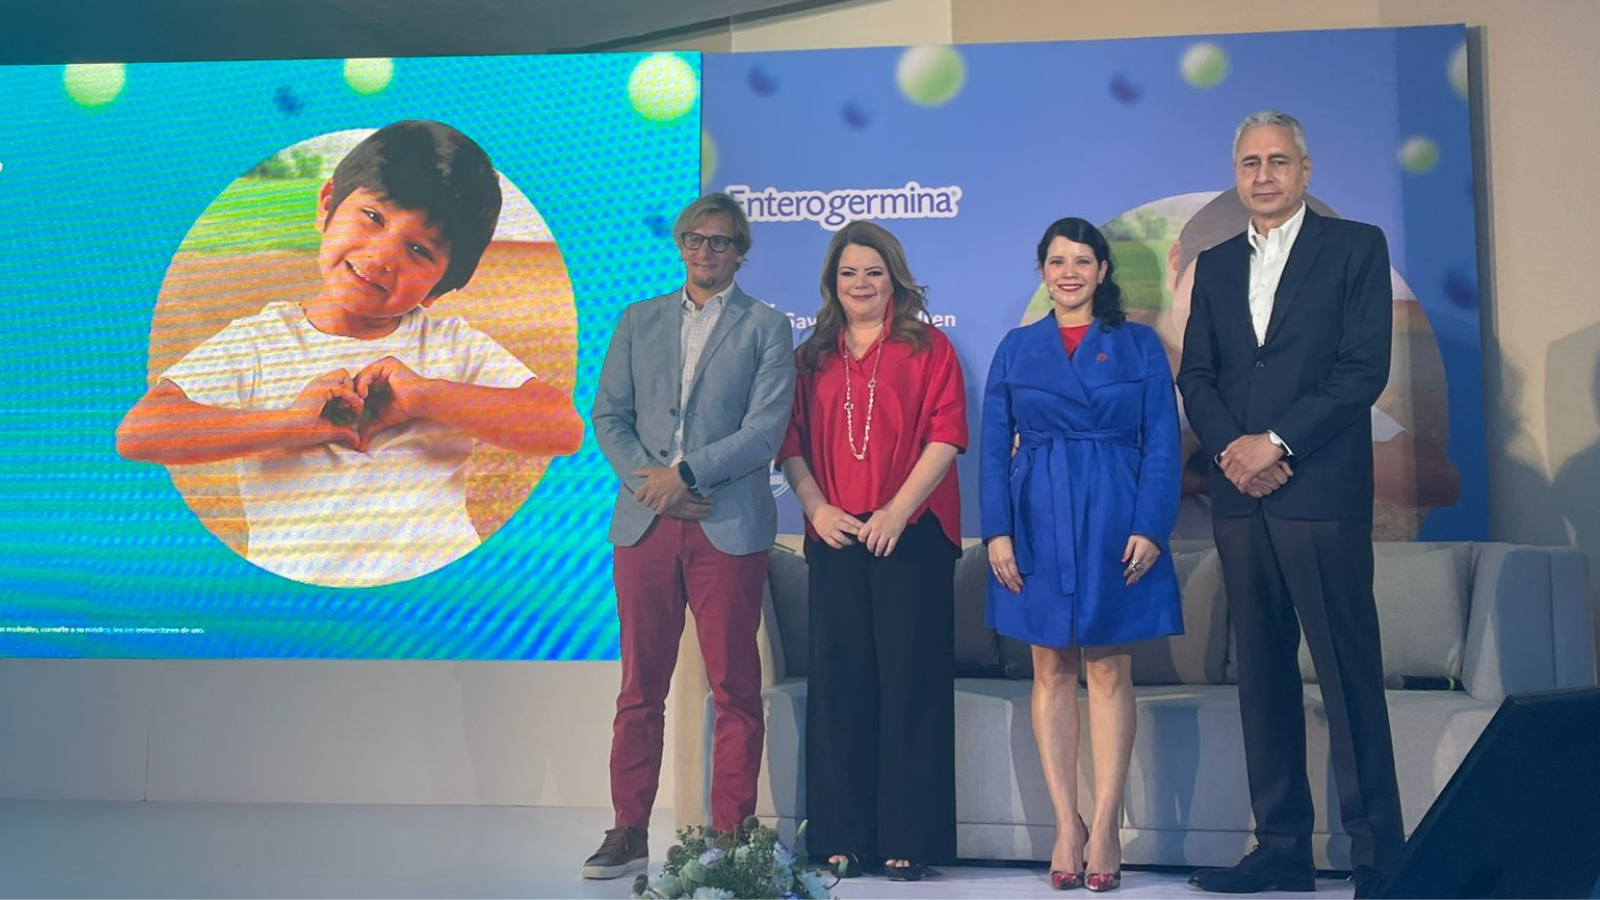 Save the Children, Sanofi y Farmacias Guadalajara unen esfuerzos a favor de la salud infantil